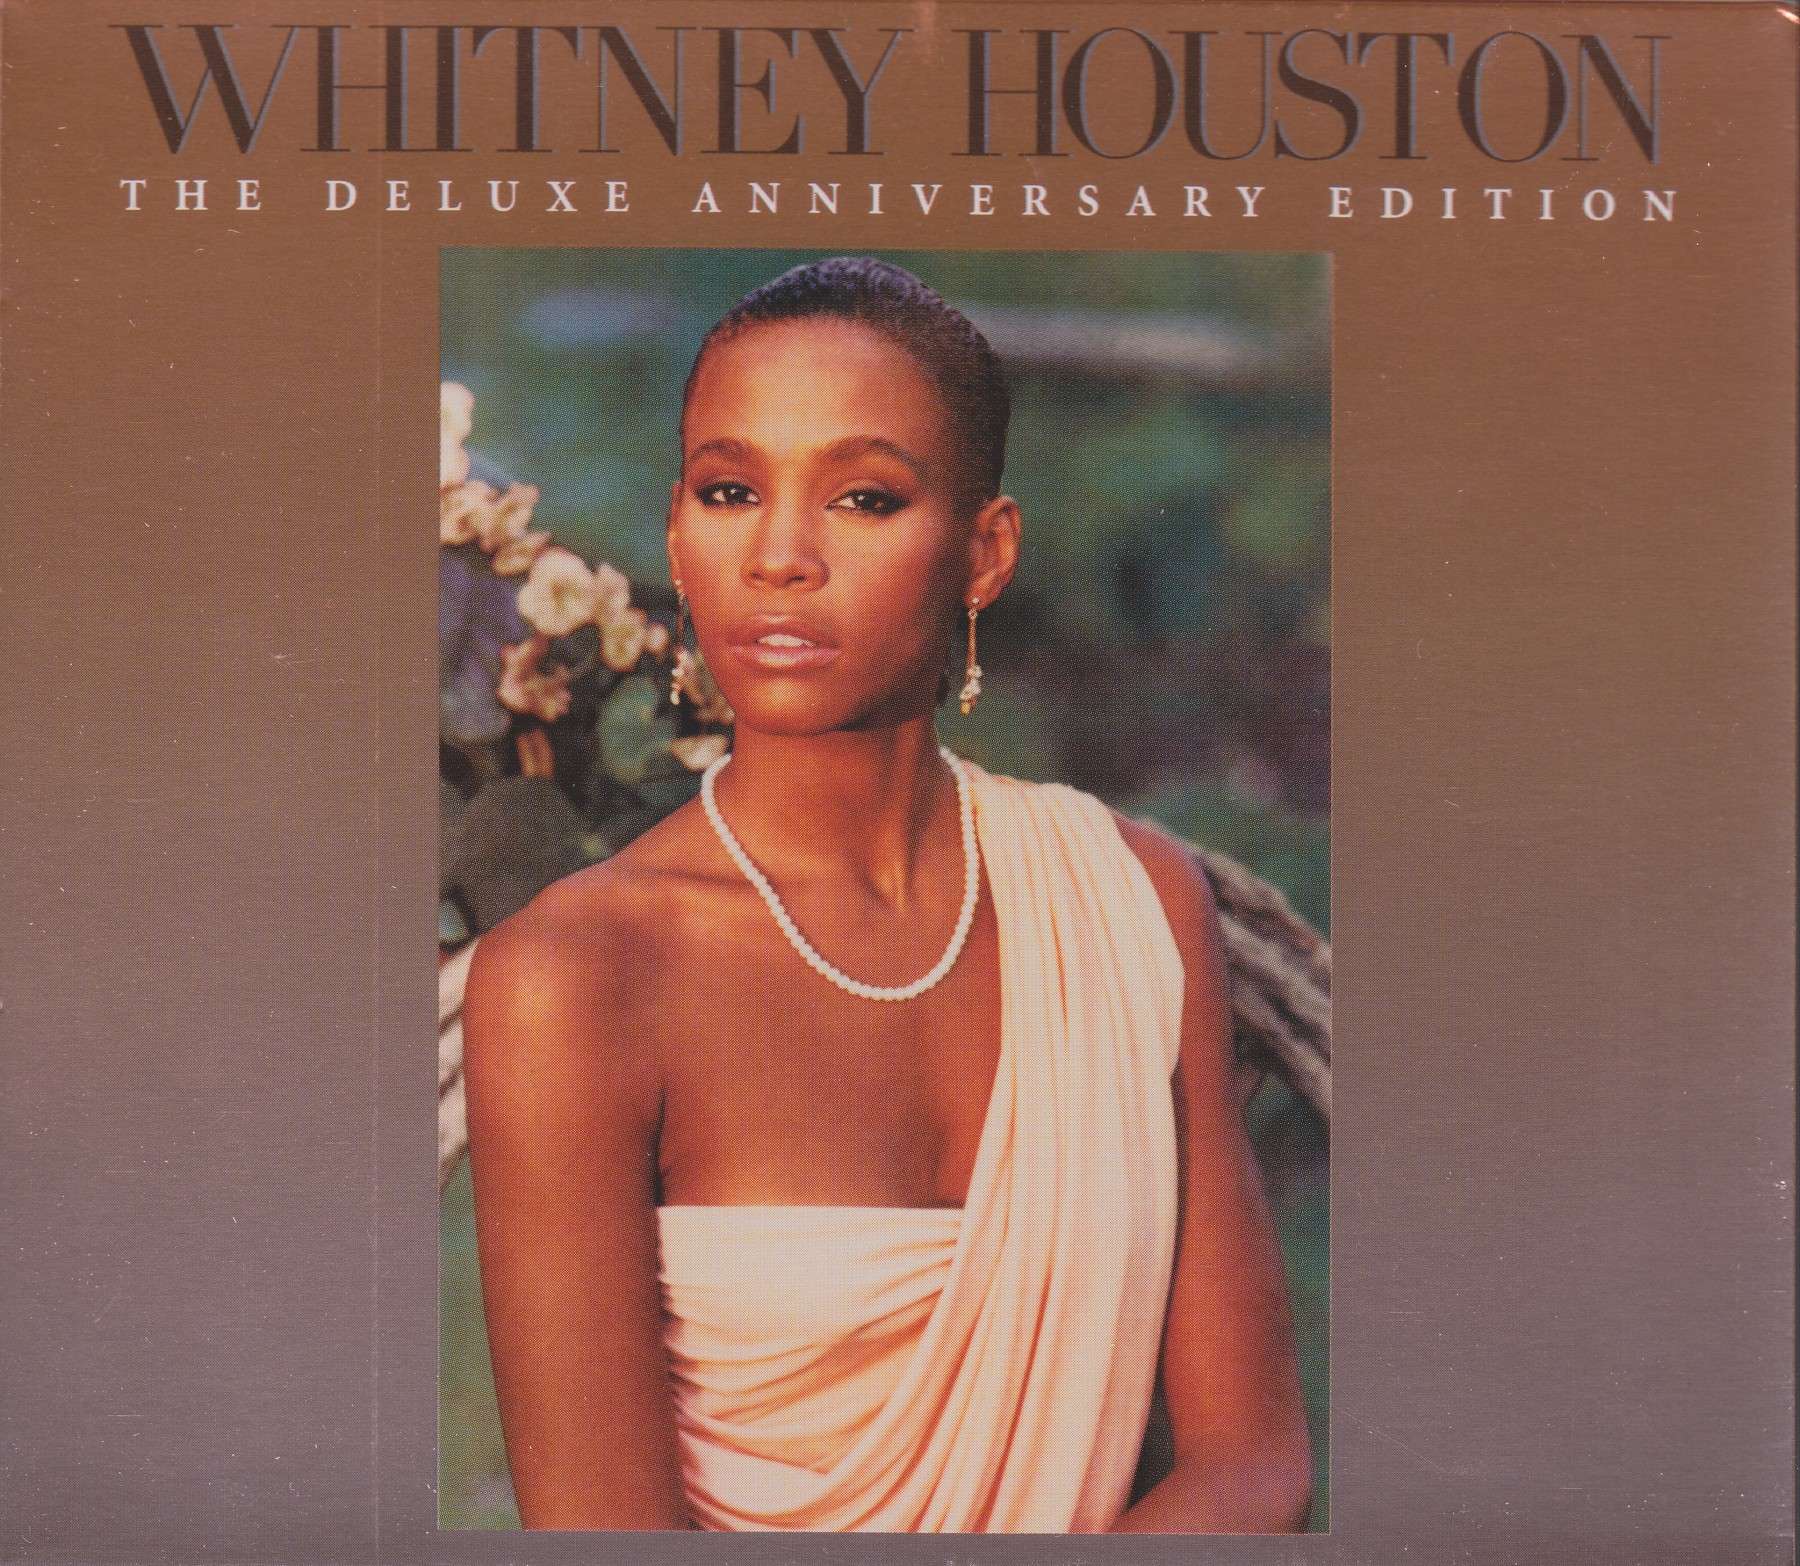 Whitney Houston《Whitney Houston The Deluxe Anniversary Edition》[CD级无损/44.1kHz/16bit]